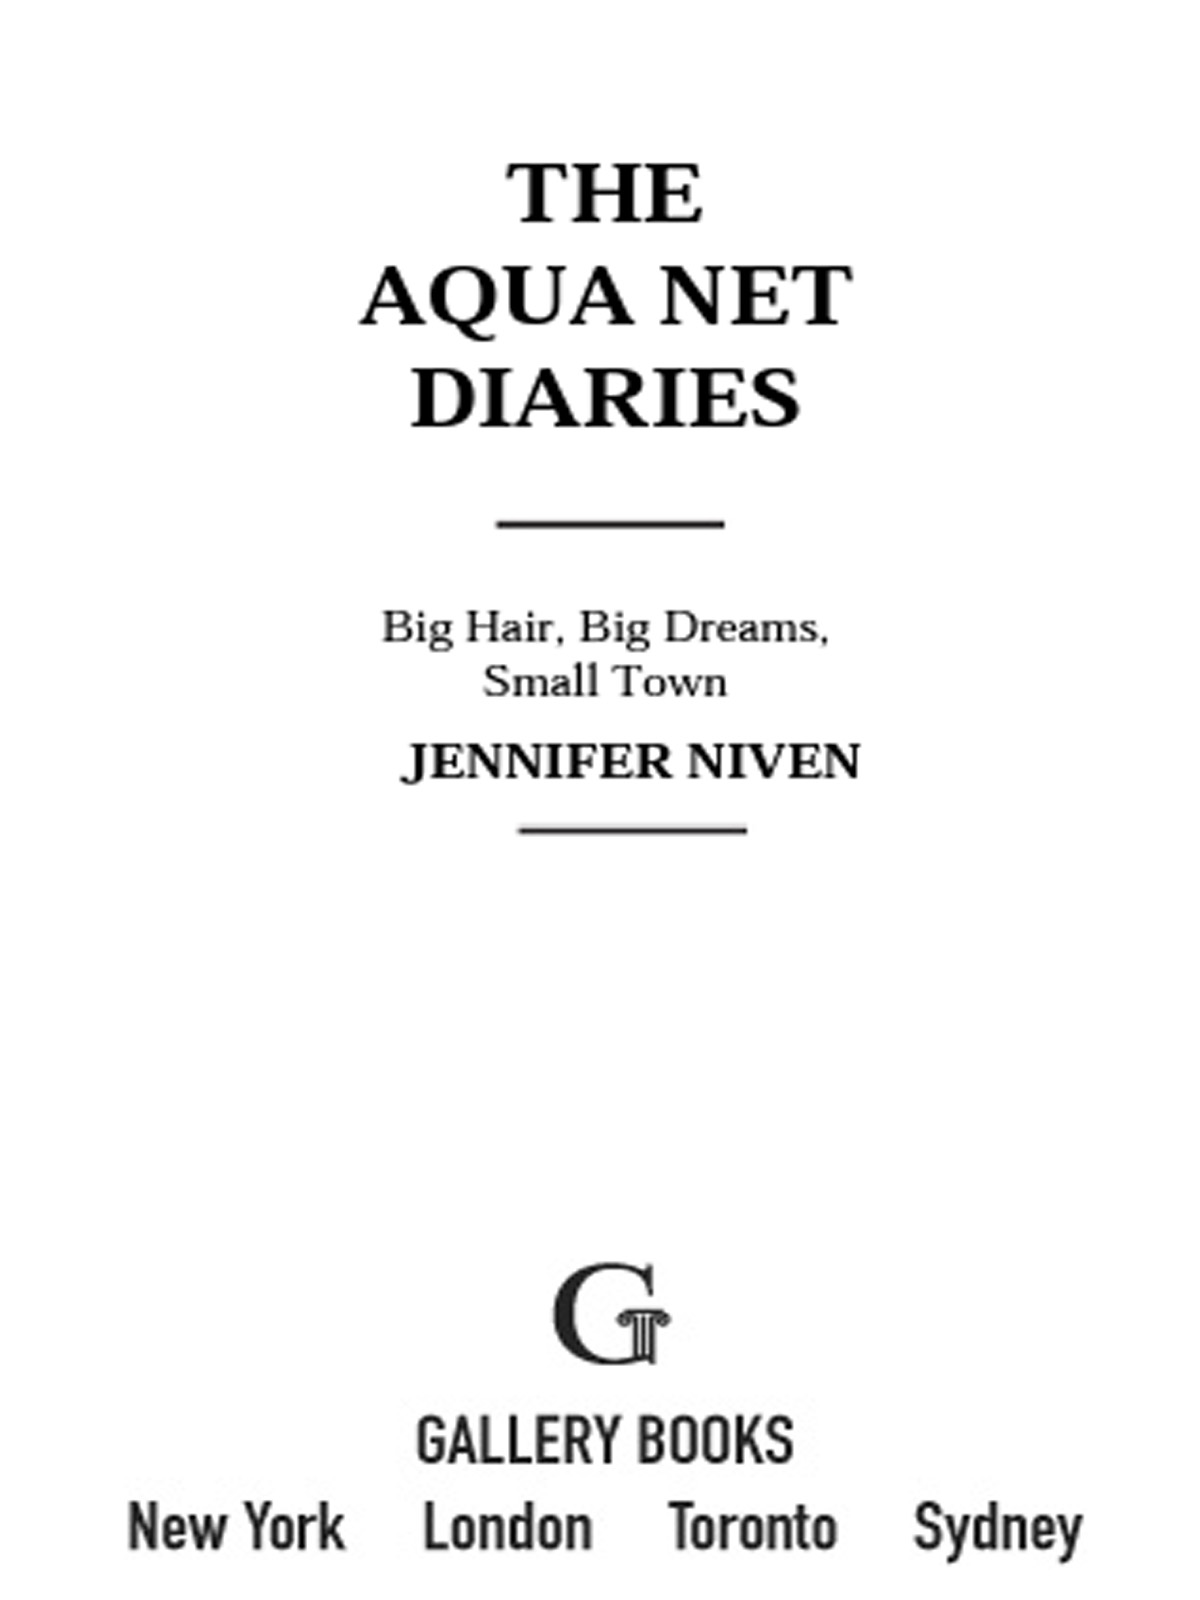 The Aqua Net Diaries (2009) by Jennifer Niven